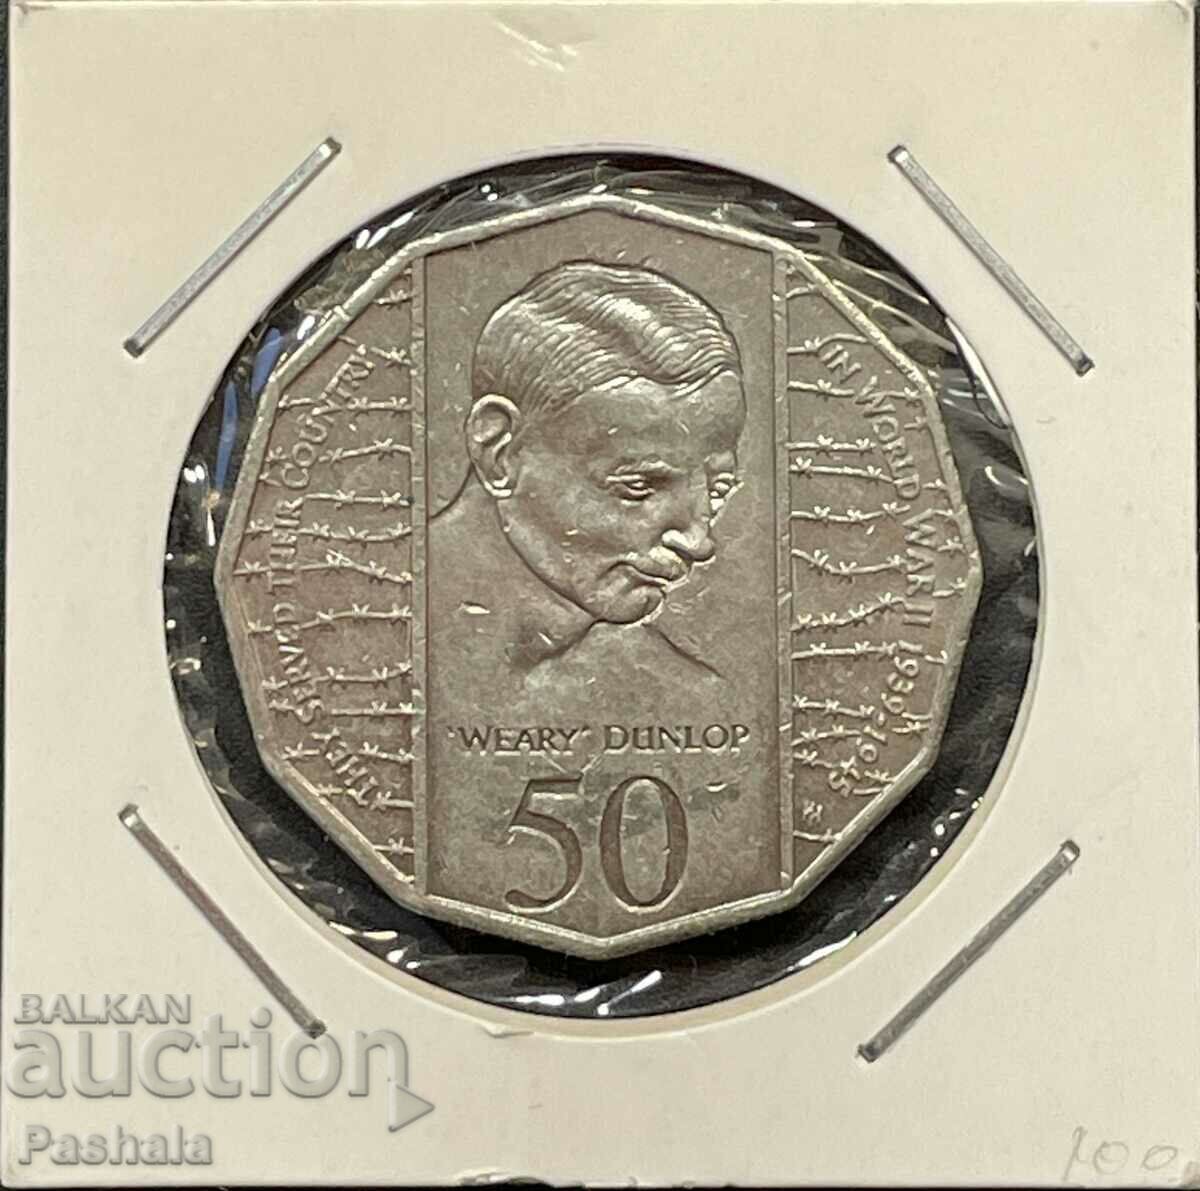 Australia 50 cents 1995